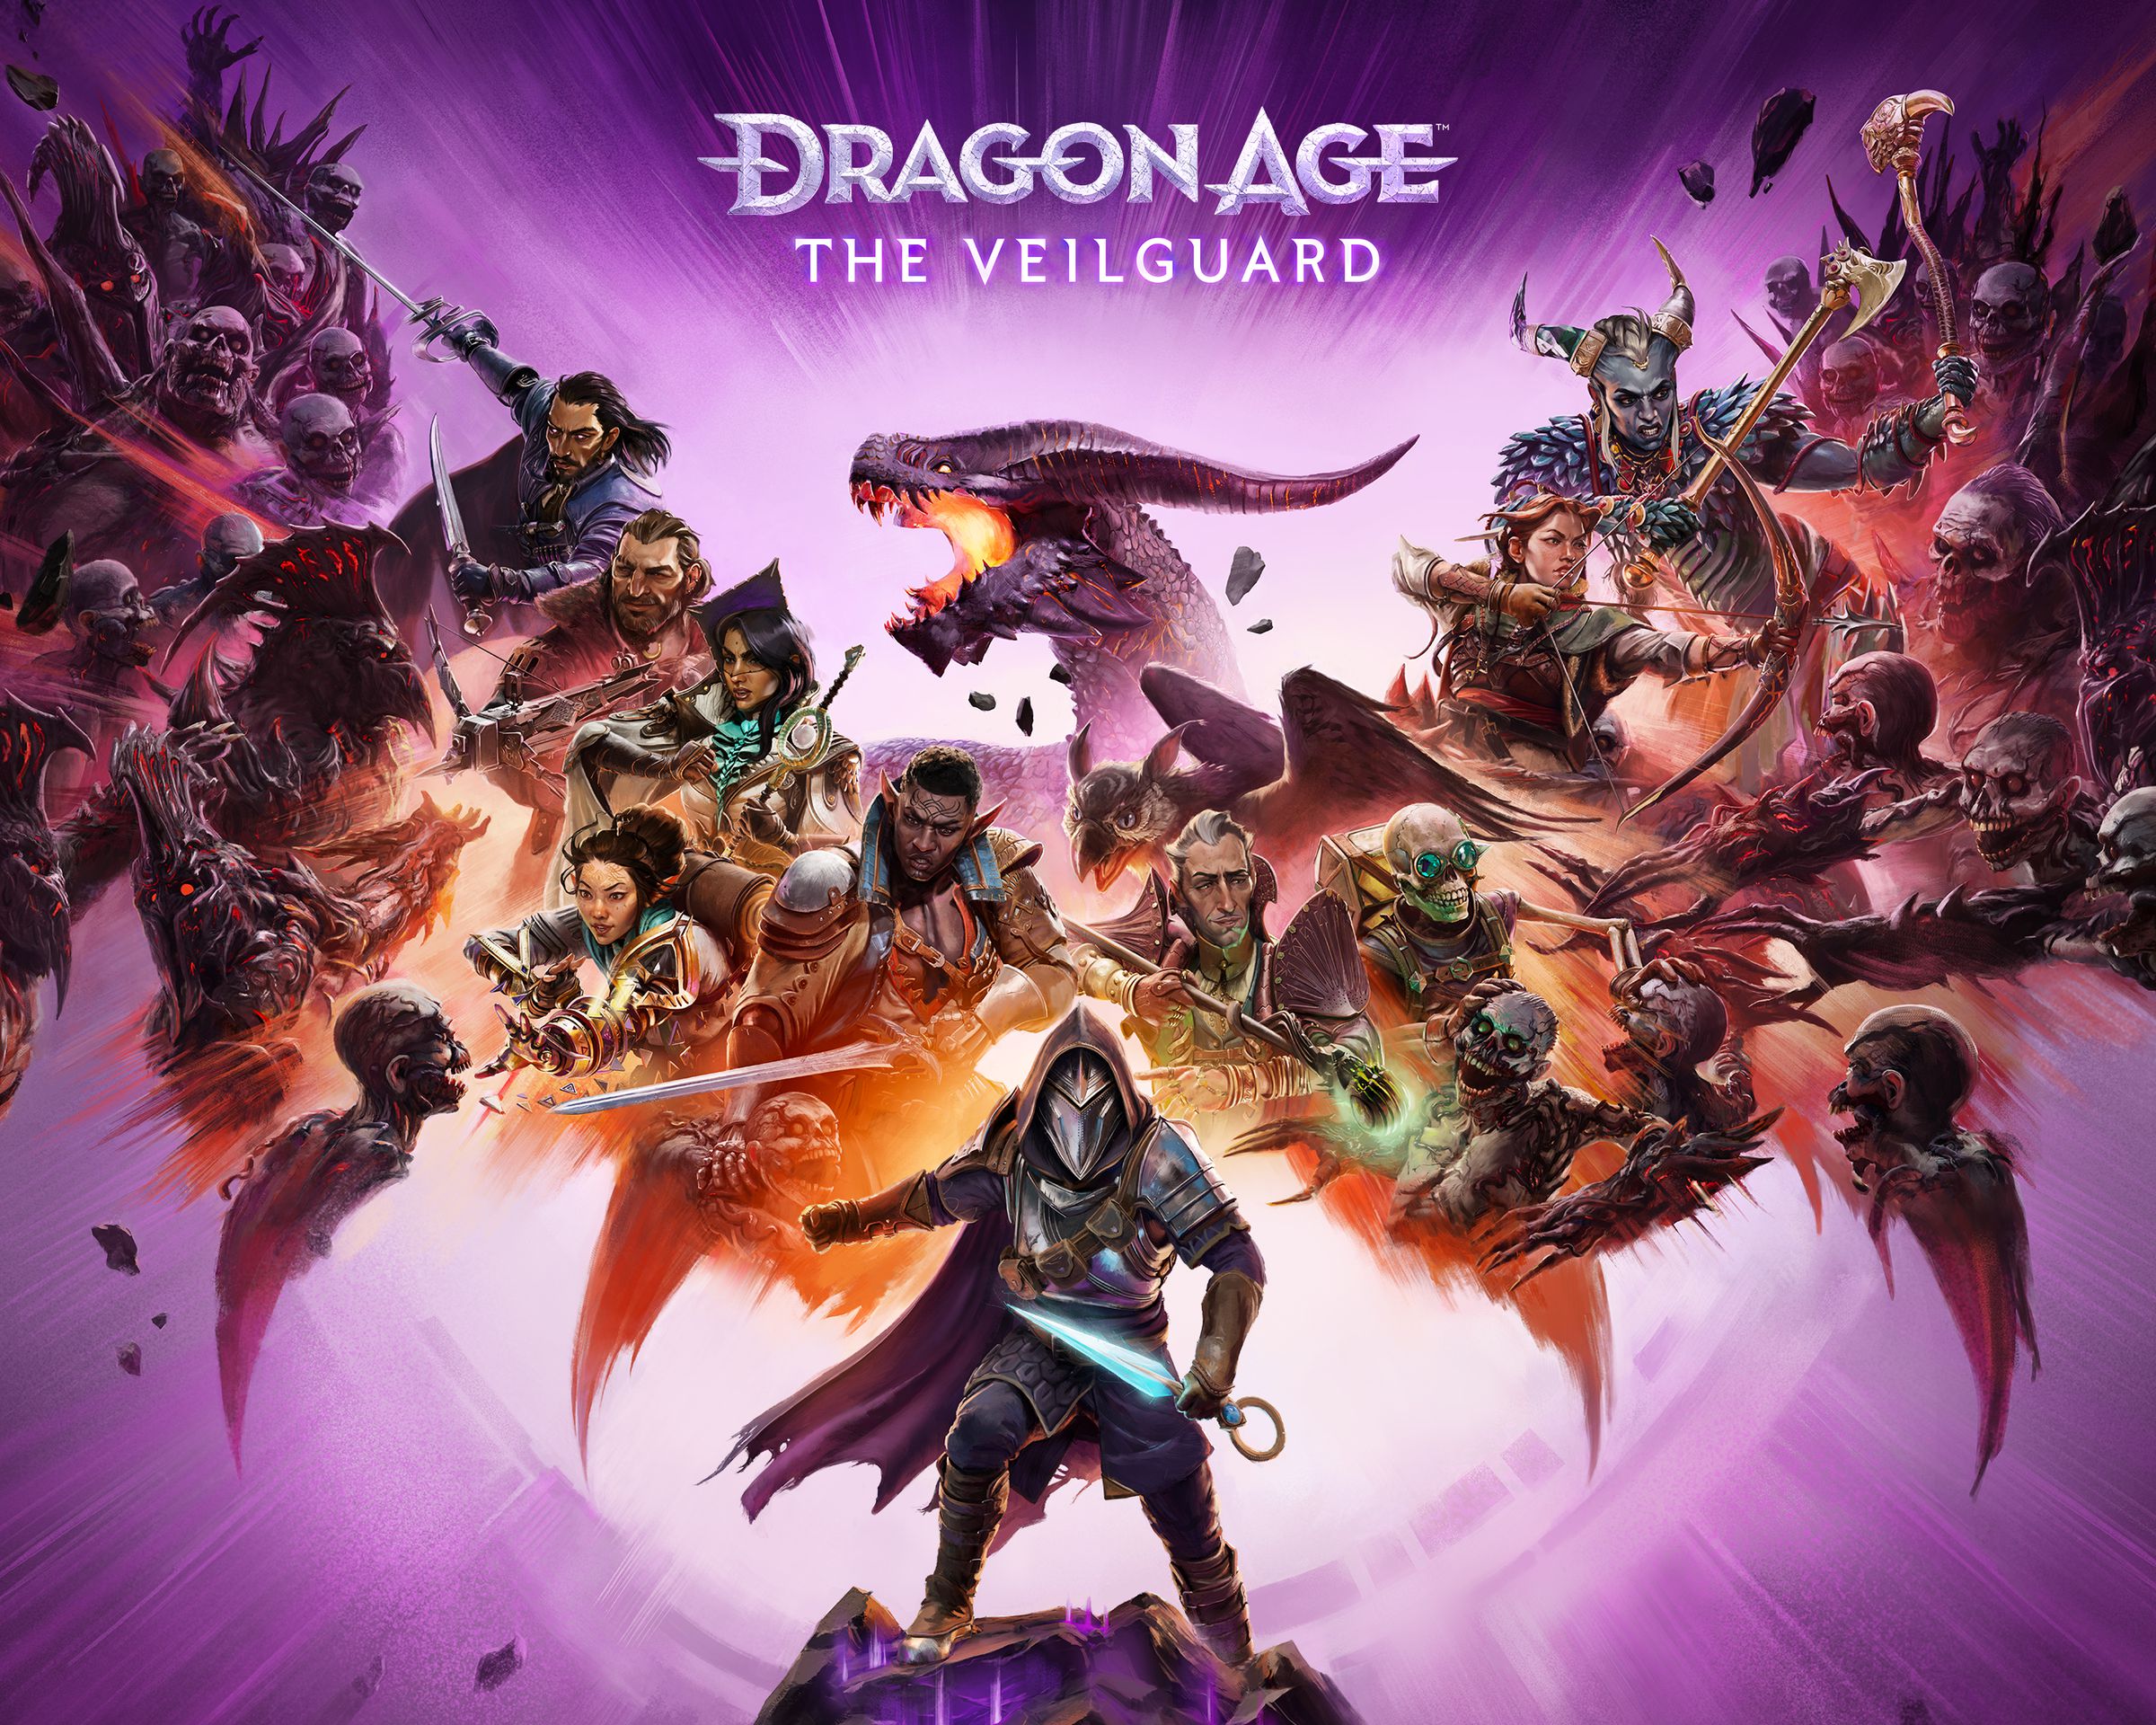 Key art from Dragon Age: The Veilguard